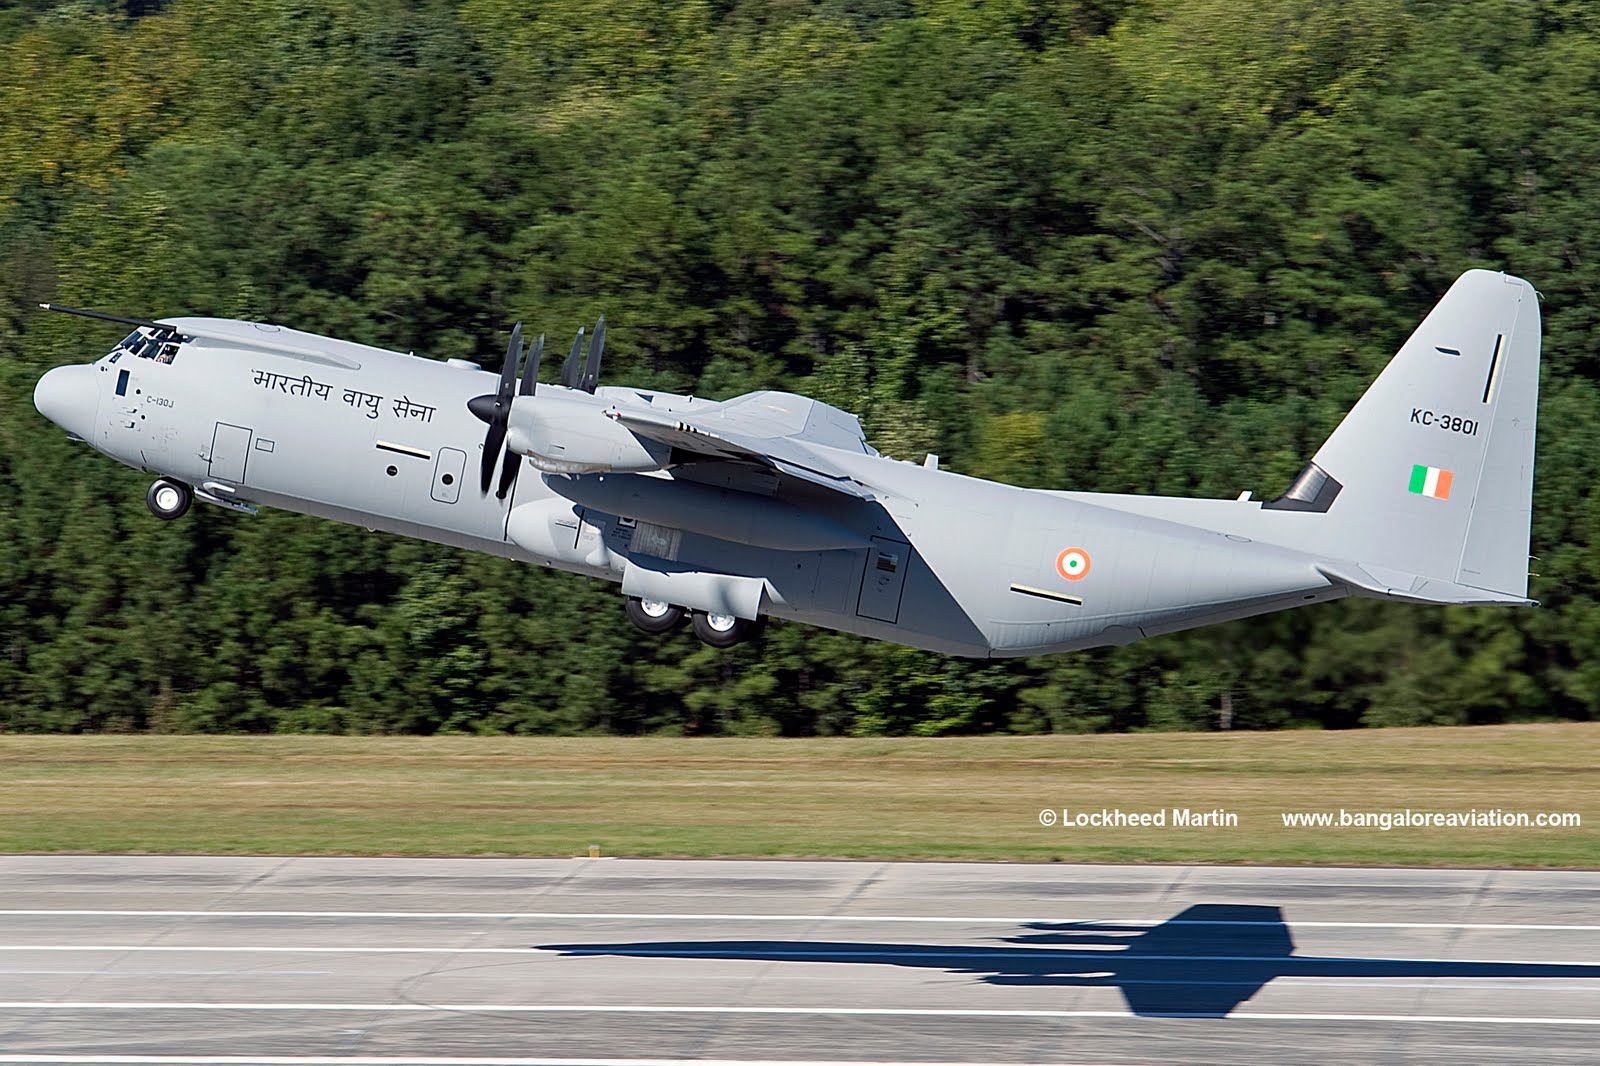 Indian_Air_Force_Lockheed_Martin_C-130J_KC-3801_first_flight2b.jpg